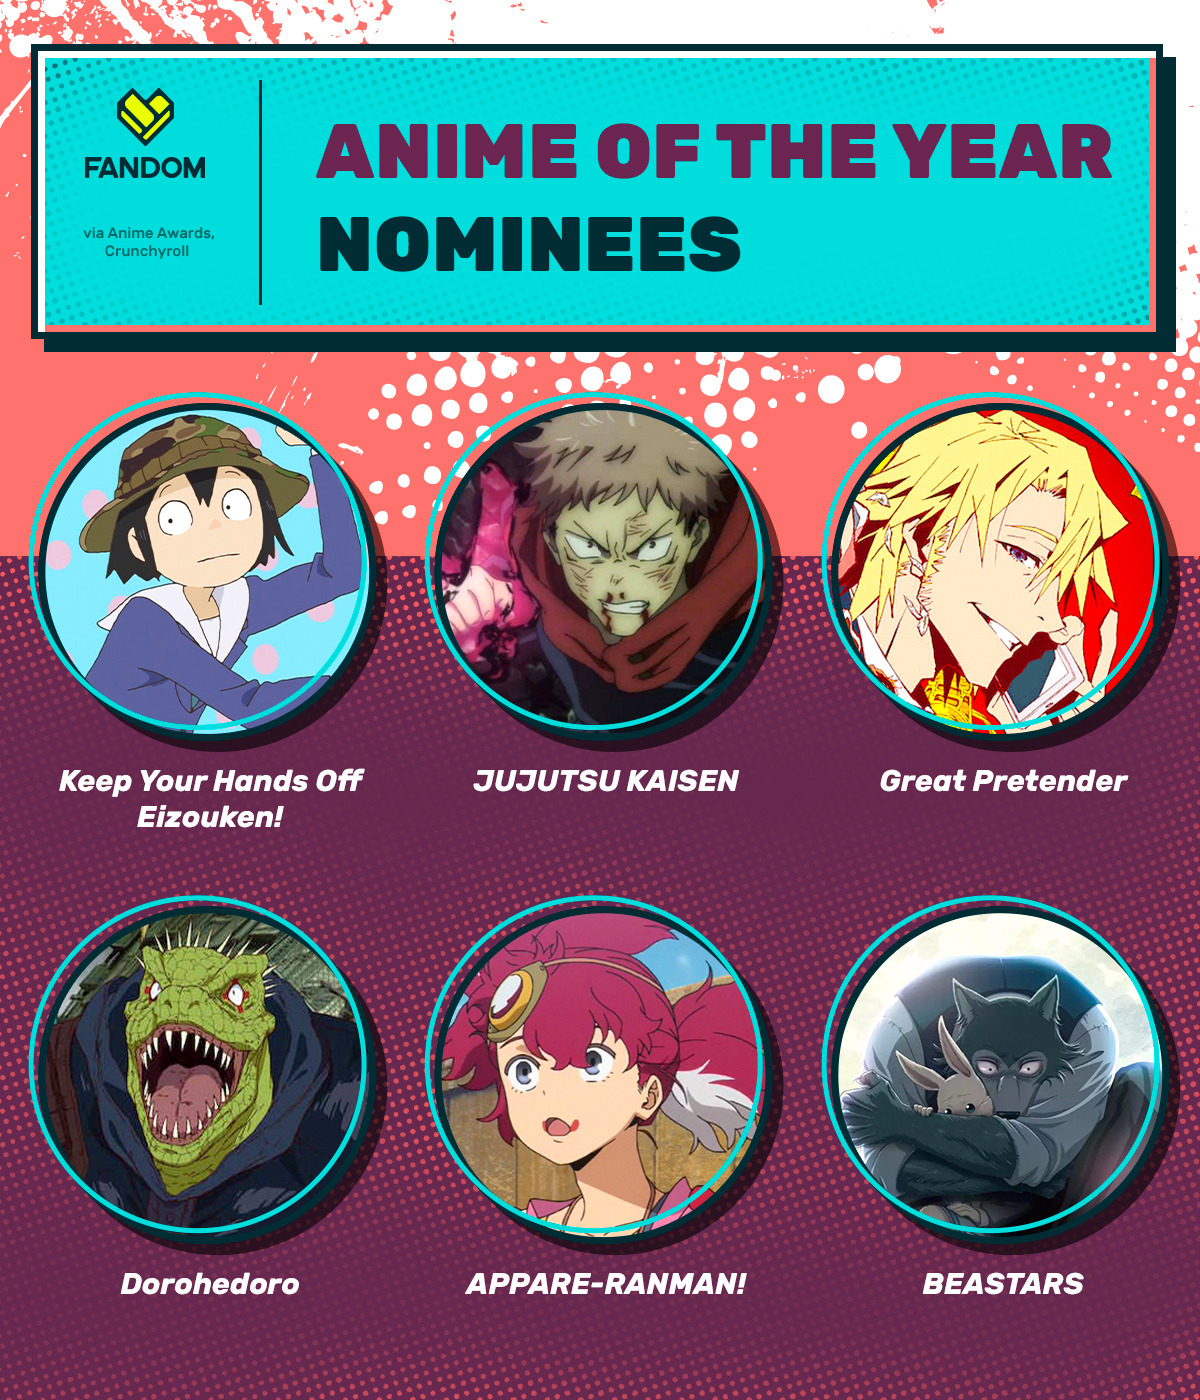 Anime Awards 2023's Nominees Announced By Crunchyroll